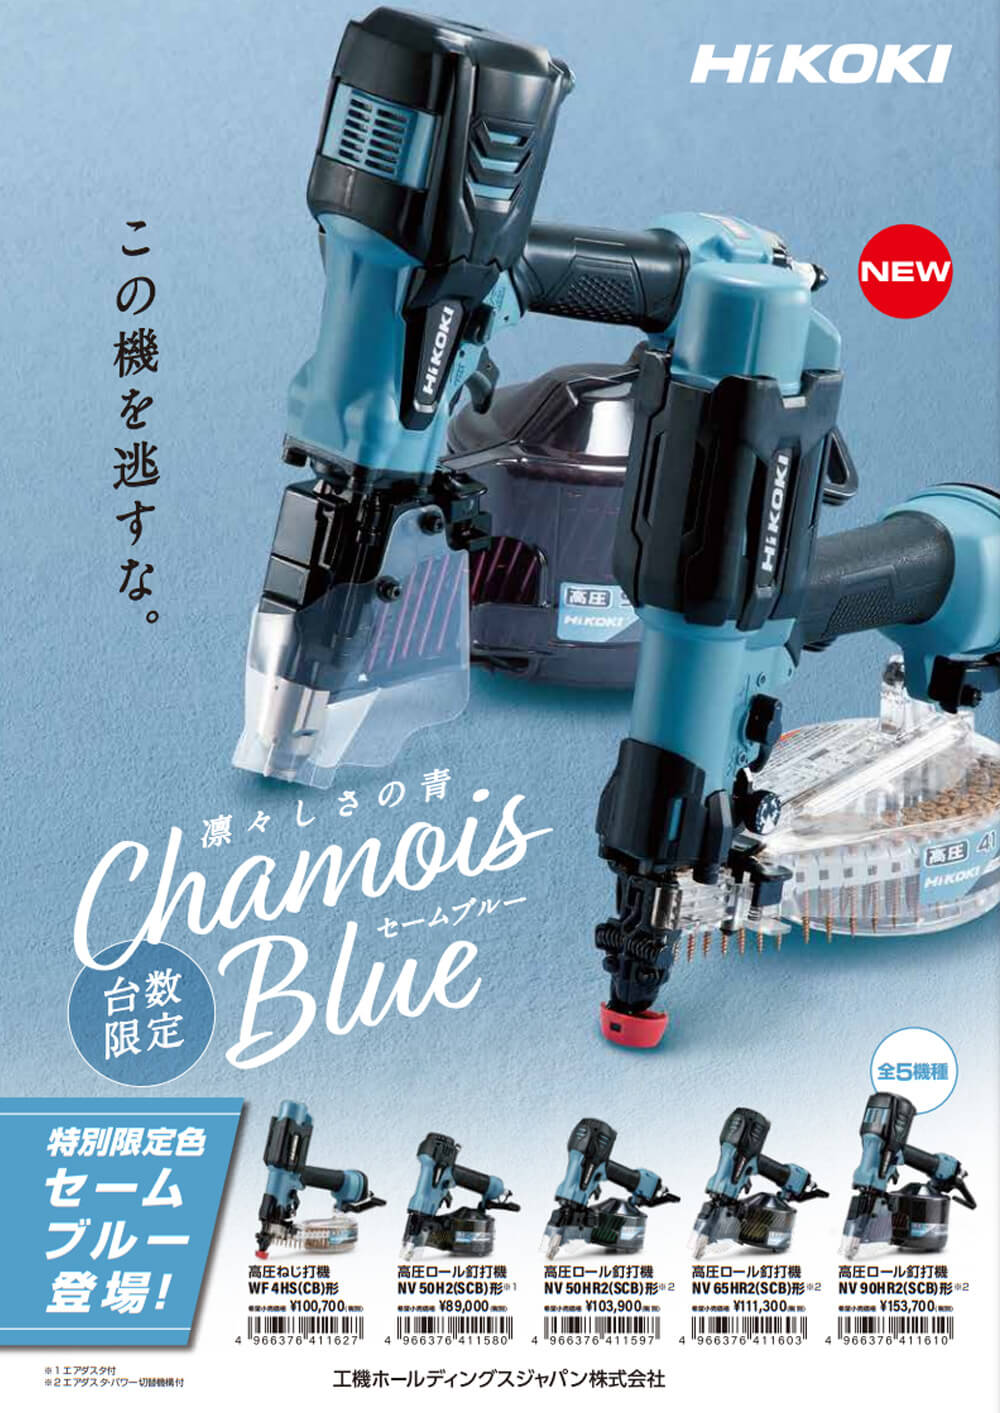 HiKOKI NV90HR2(SCB) 90mm高圧ロール釘打機 セームブルー【限定色 